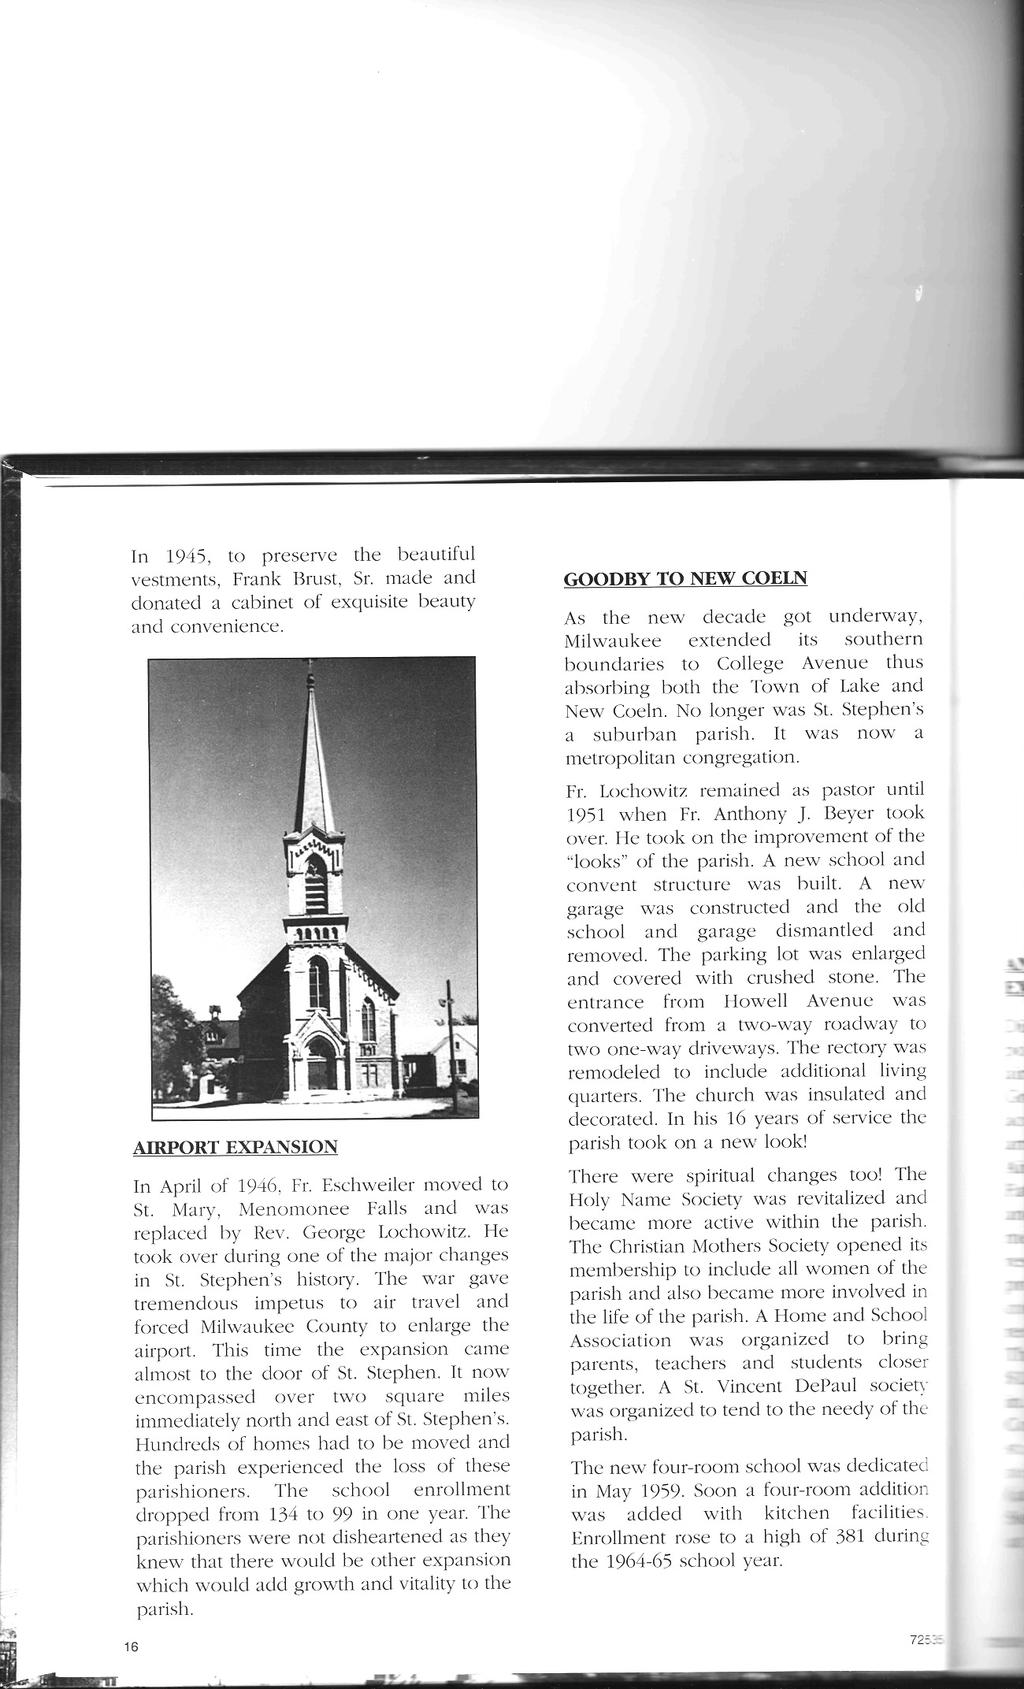 1988-1993 St. Stephen s Parish Original Location: 5880 S. Howell Avenue, Milwaukee Built new church in 2009, 1441 W. Oakwood Road, Oak Creek Temporary Administrator, Pastor, 1993-1999 St.